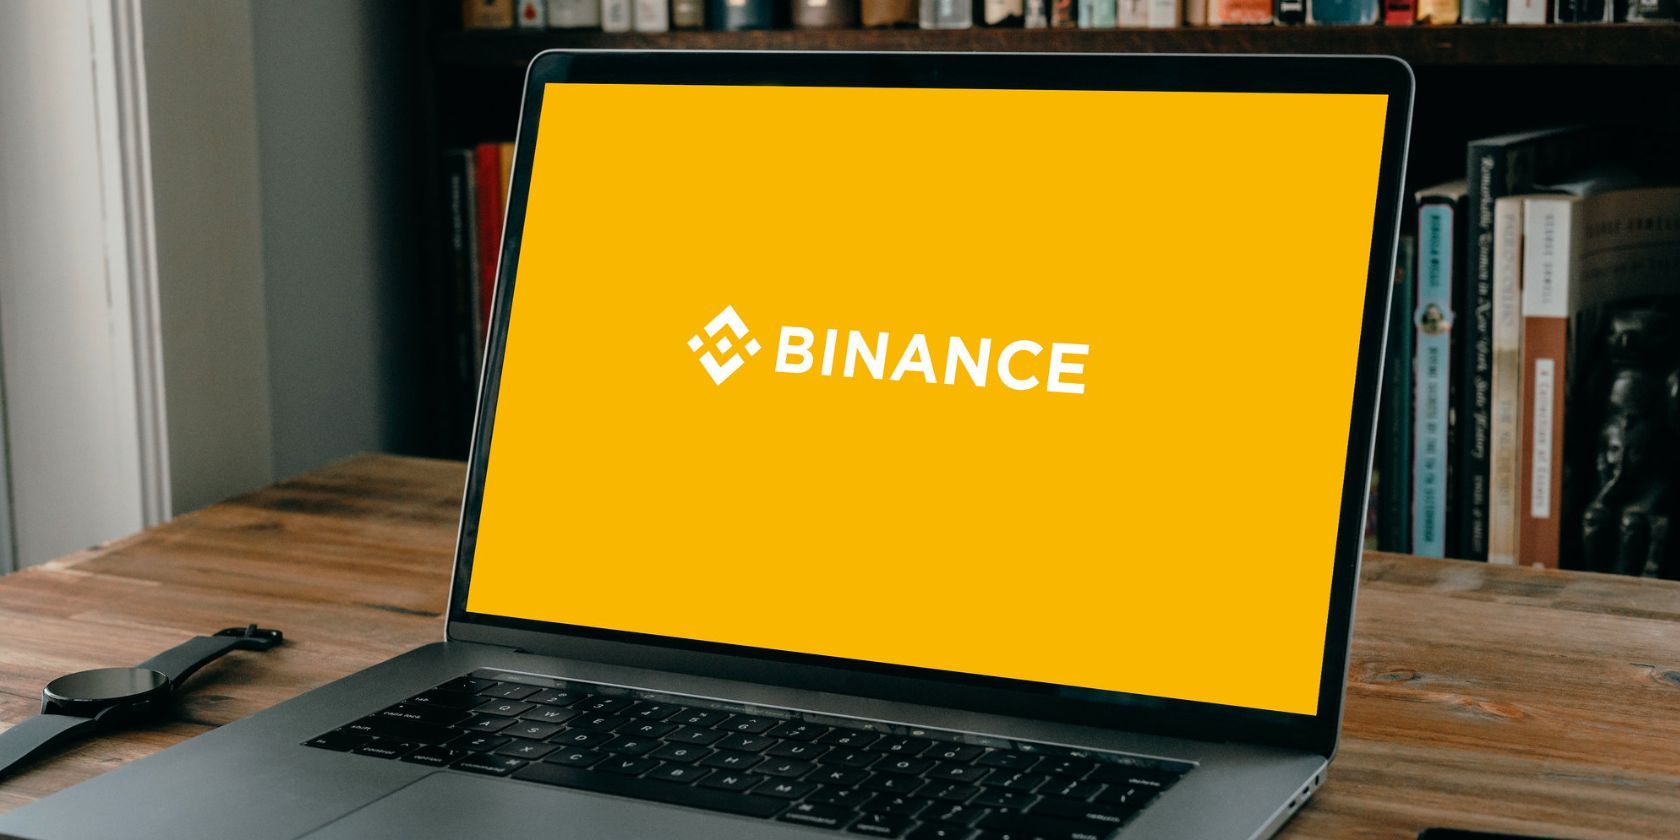 binance logo on laptop screen